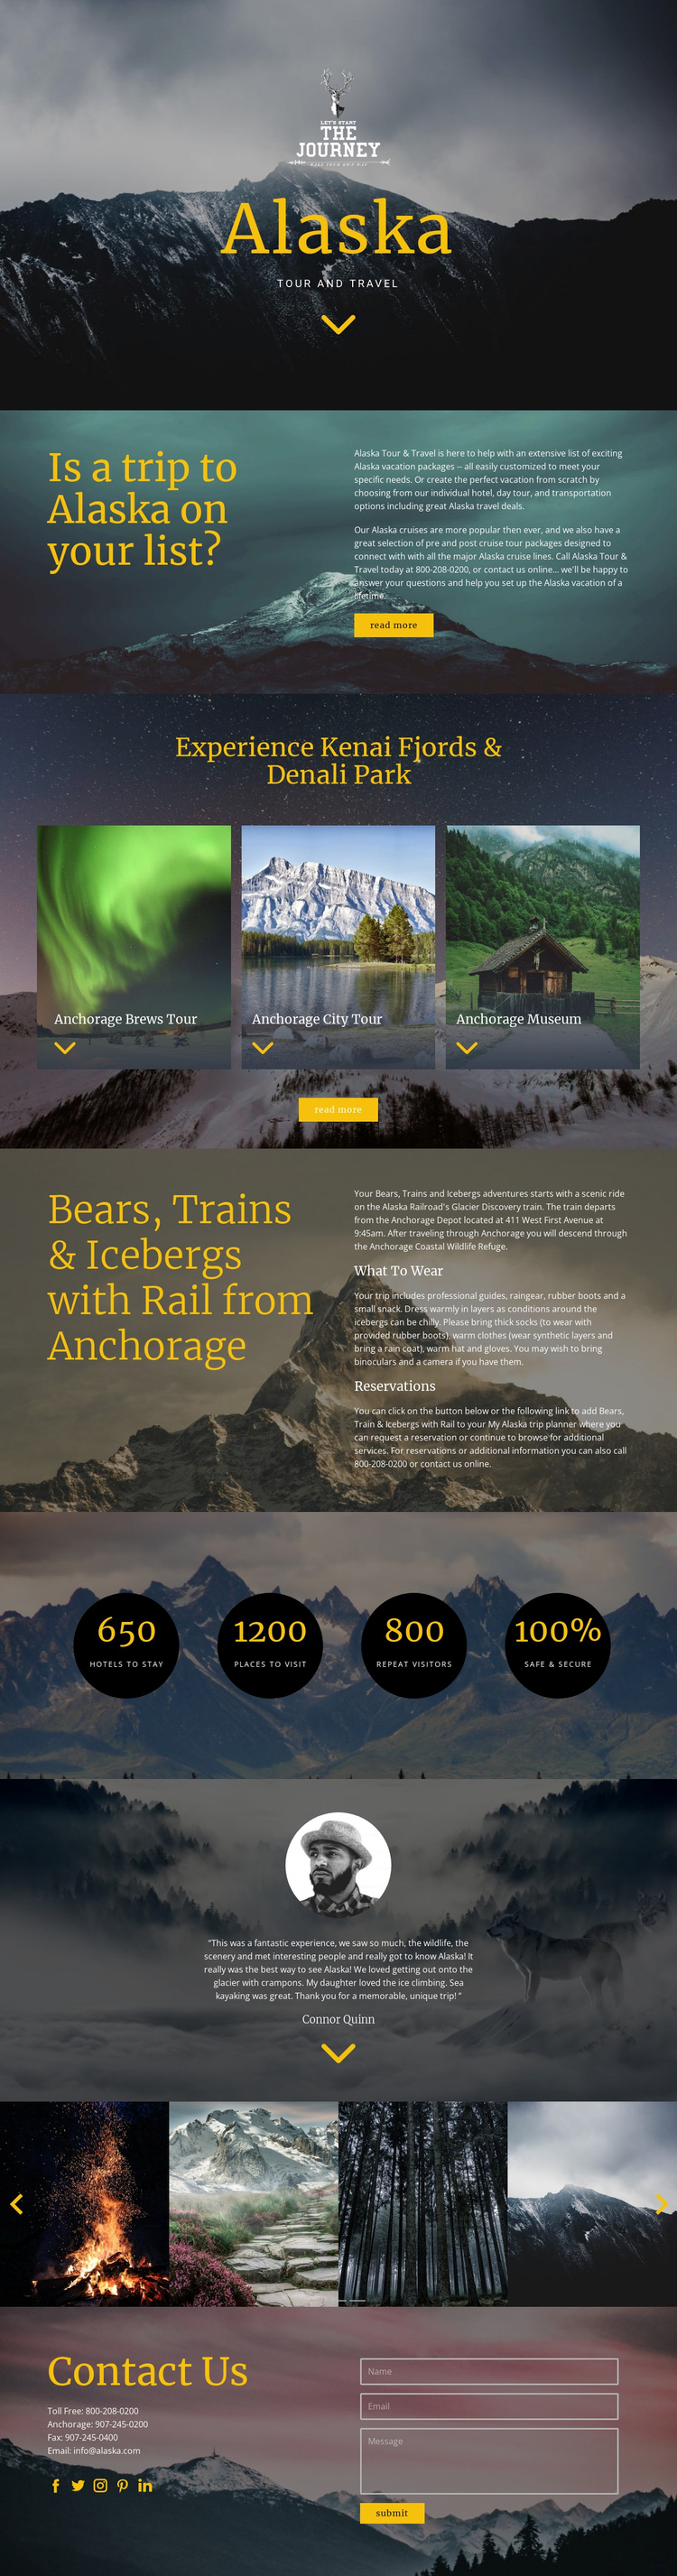 Alaska Travel Website Builder Software